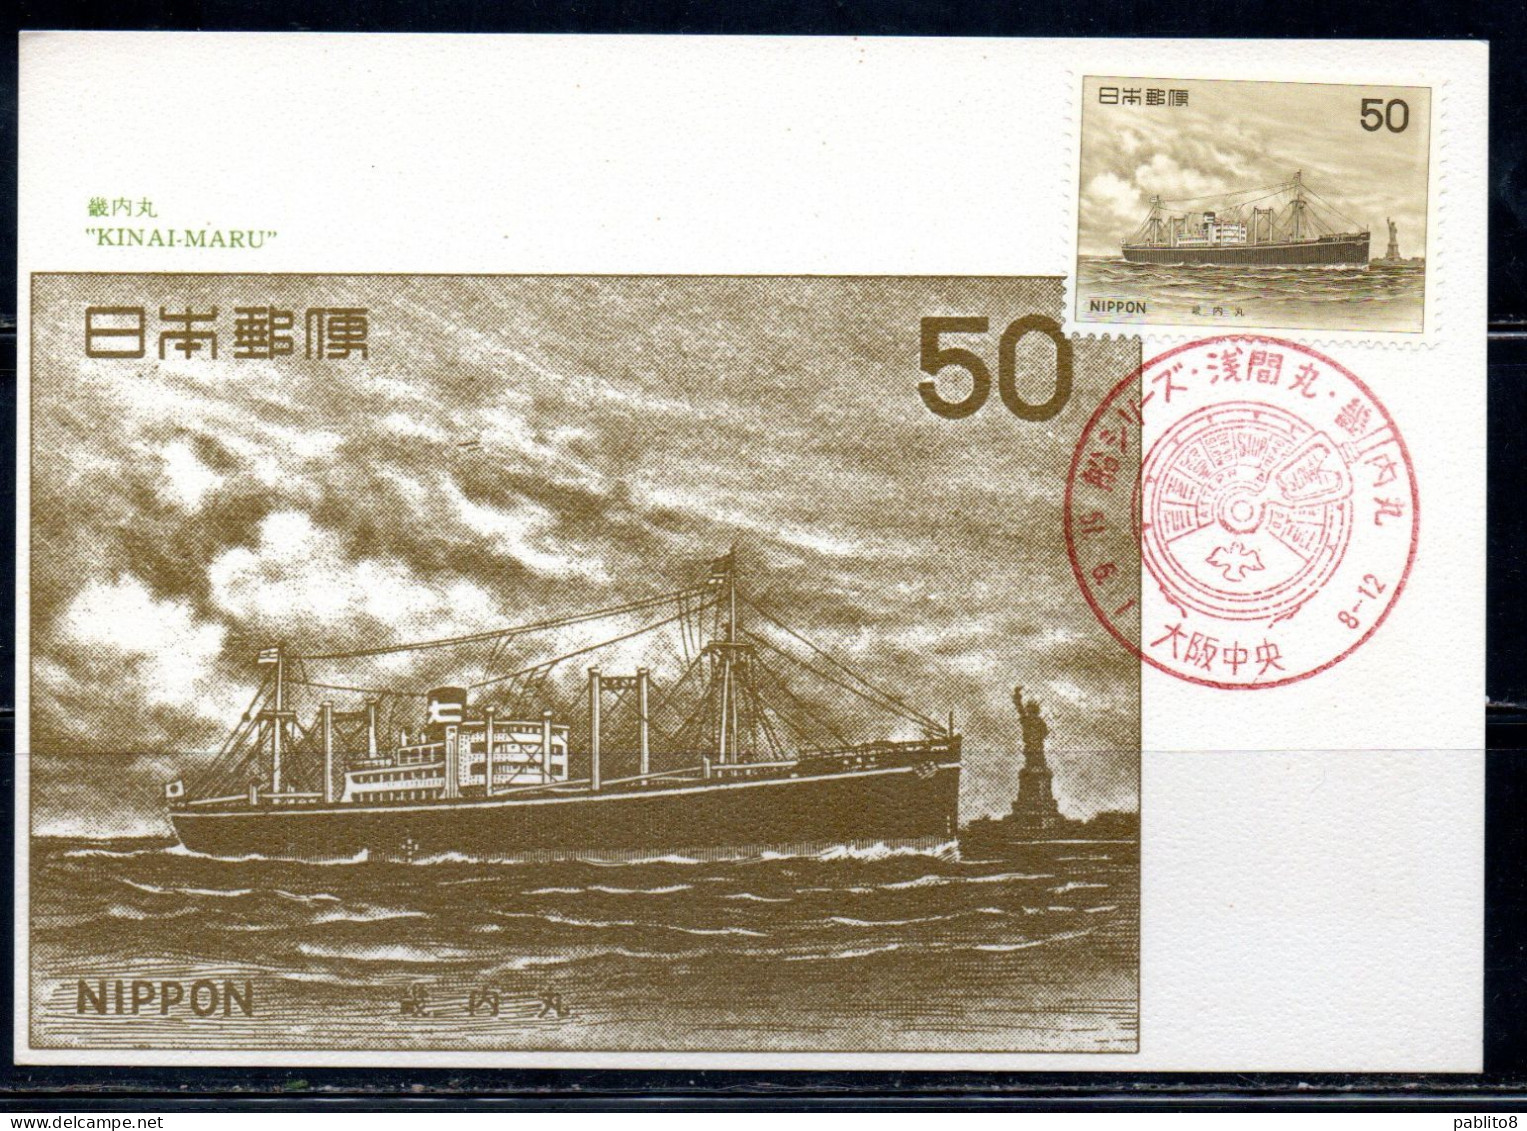 JAPAN GIAPPONE 1975 1976 HISTORIC SHIPS ISSUE KINAI-MARU SHIP 50y MAXI MAXIMUM CARD - Cartes-maximum